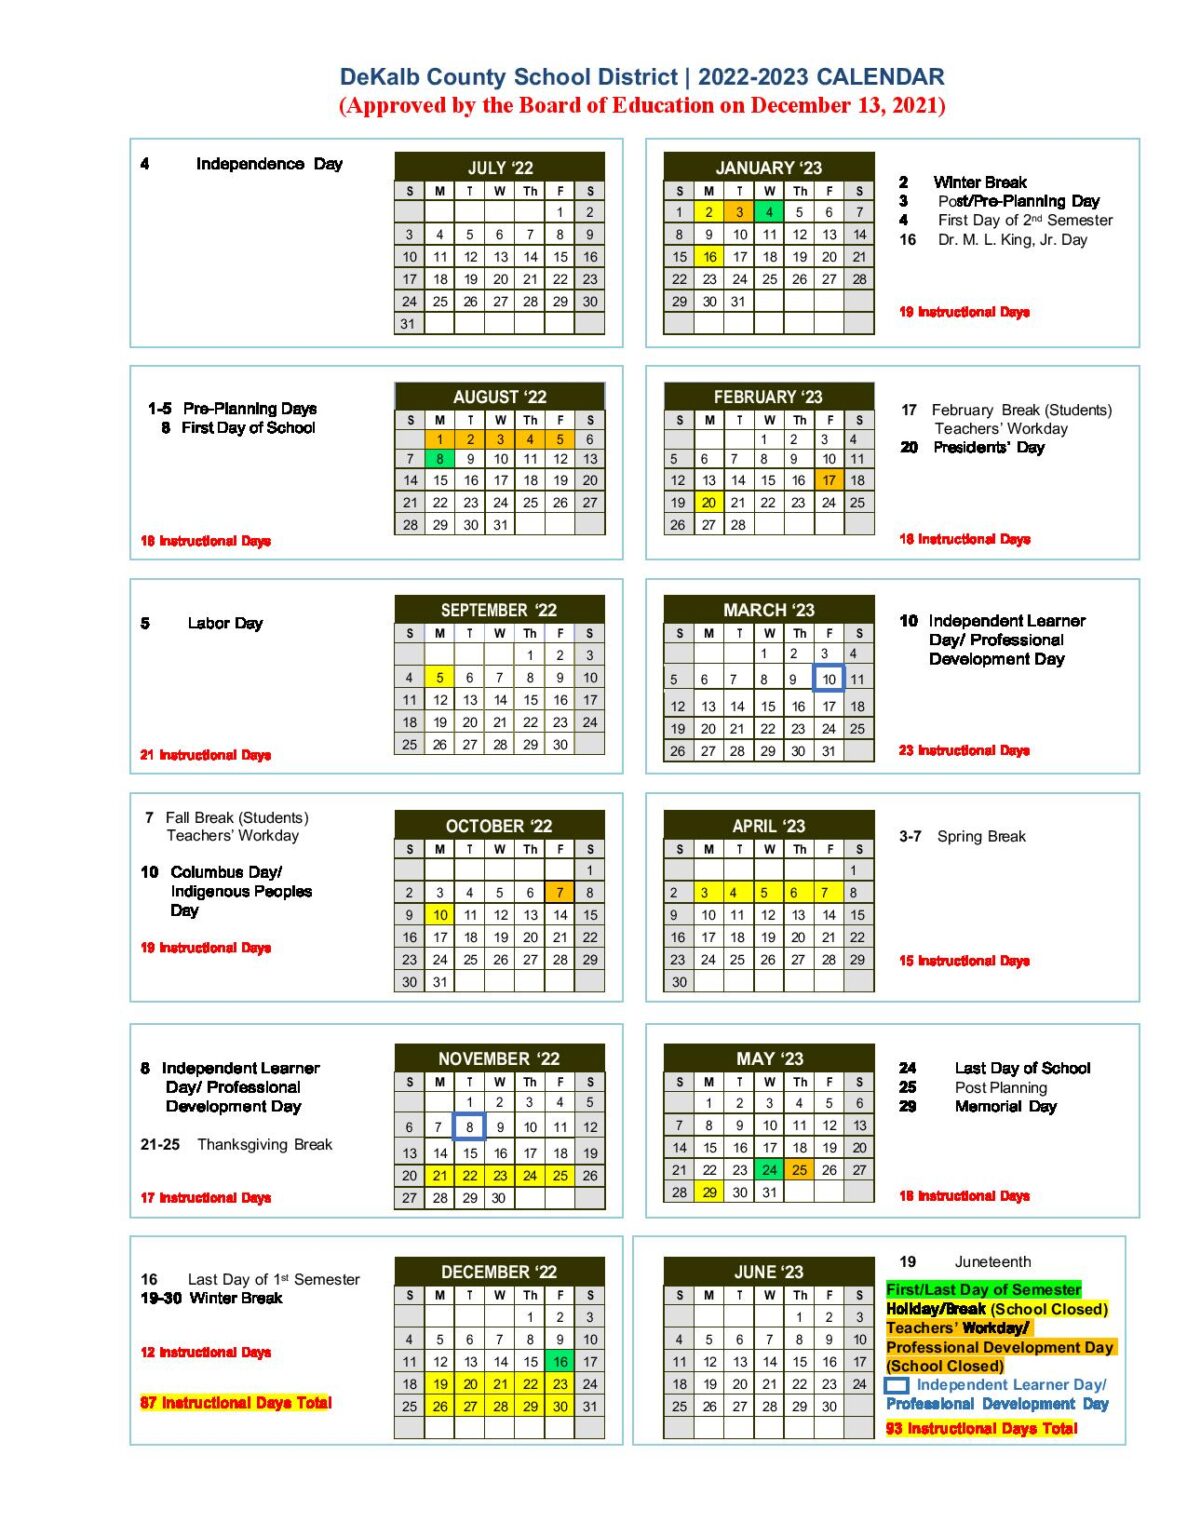 DeKalb County School District Calendar Holidays 2022 2023